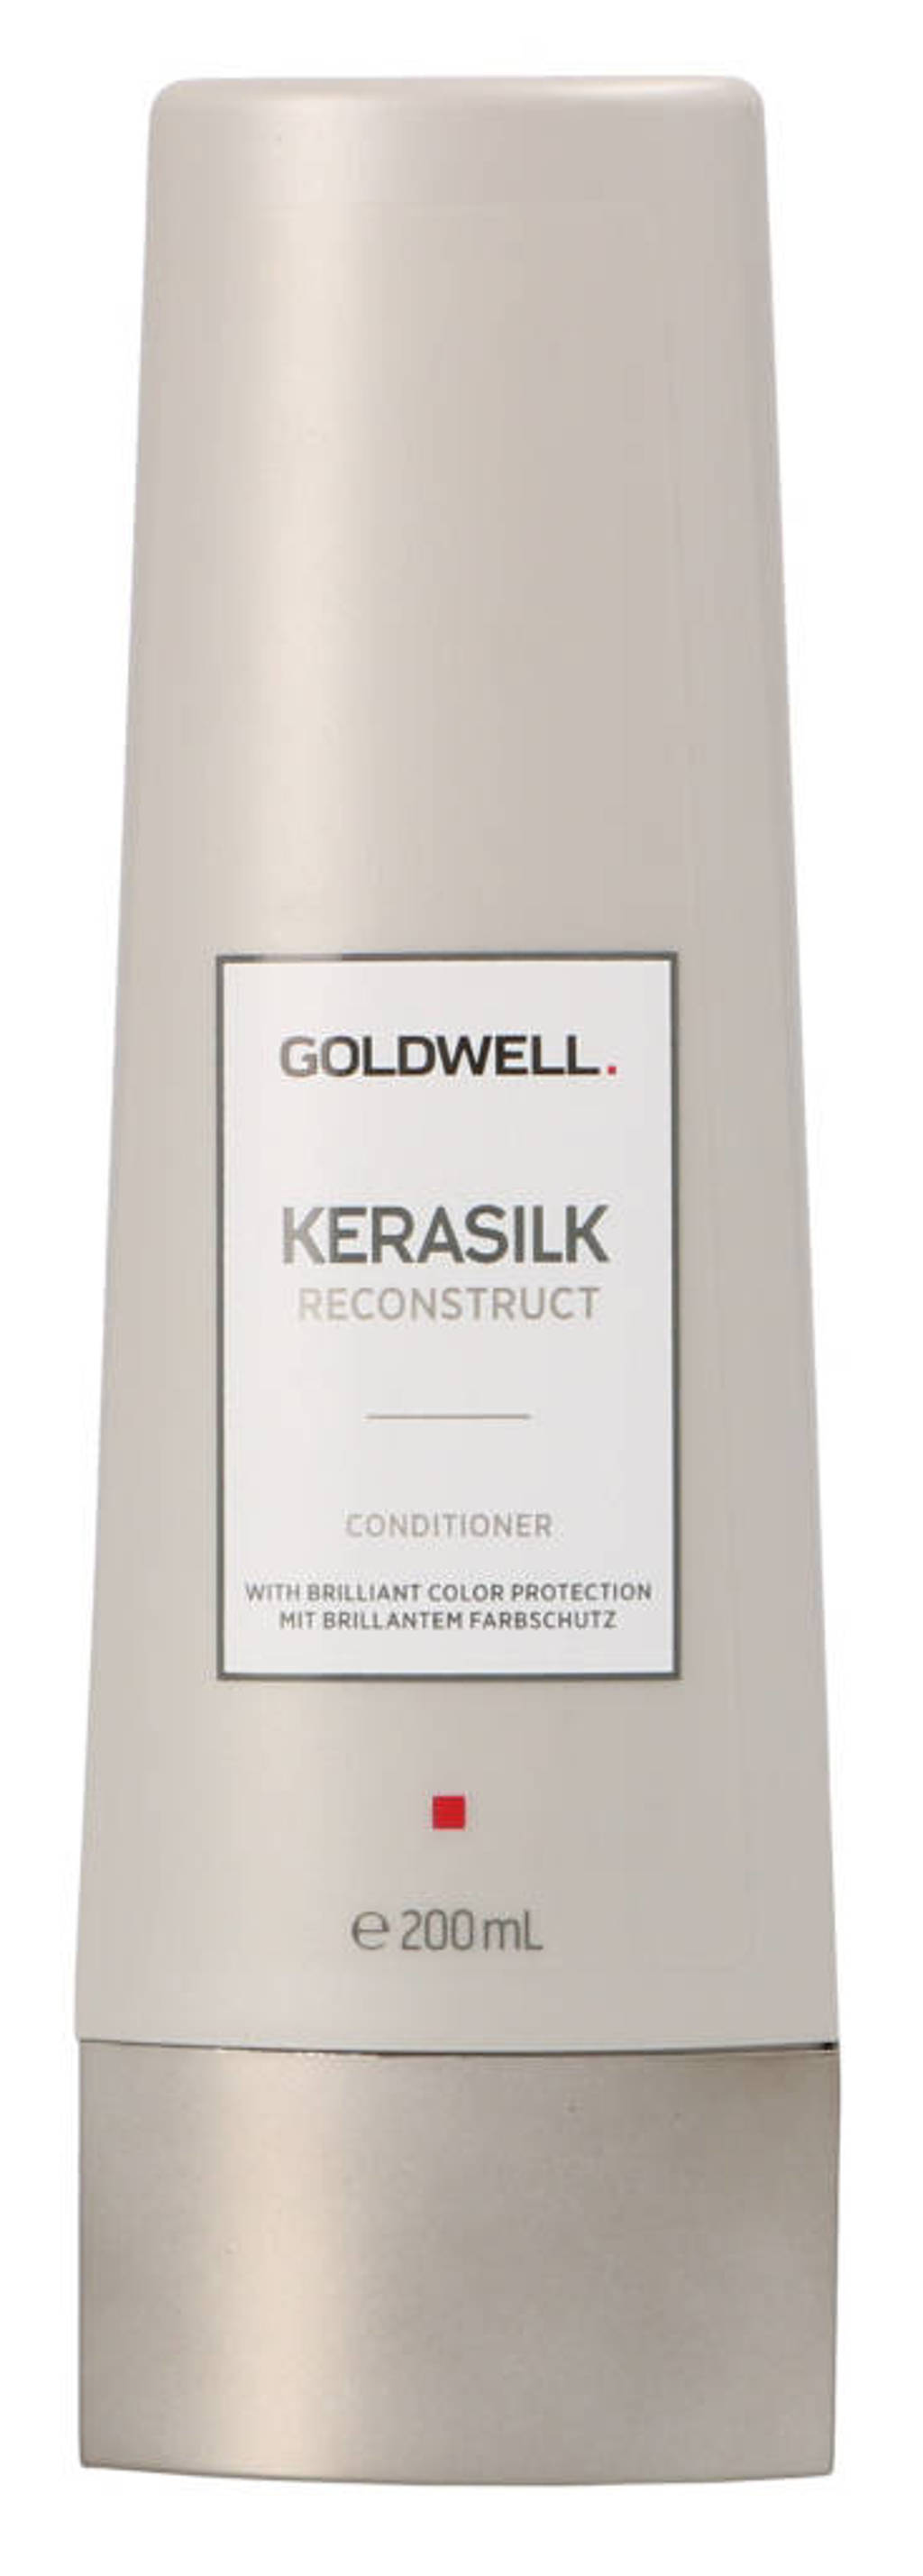 Goldwell Kerasilk Reconstruct conditioner - 200 ml